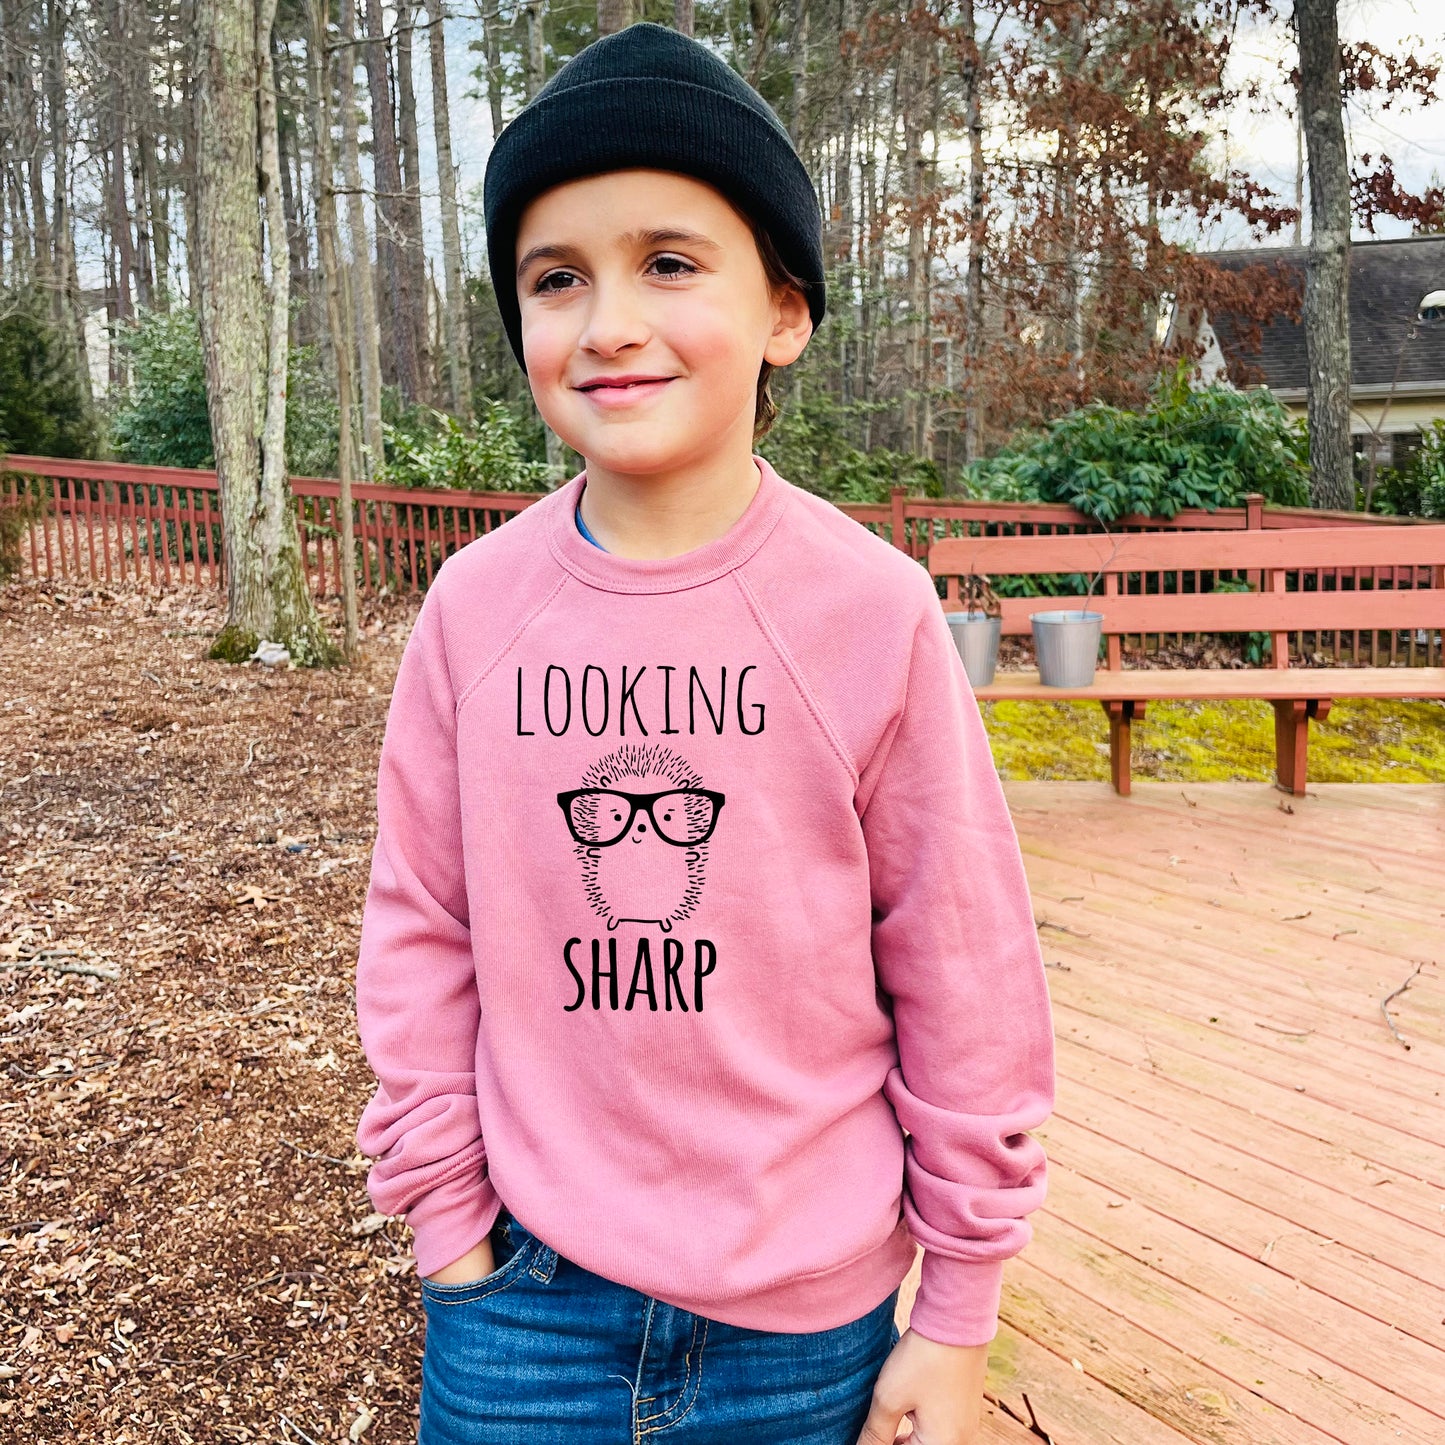 Looking Sharp (Hedgehog) - Kid's Sweatshirt - Heather Gray or Mauve